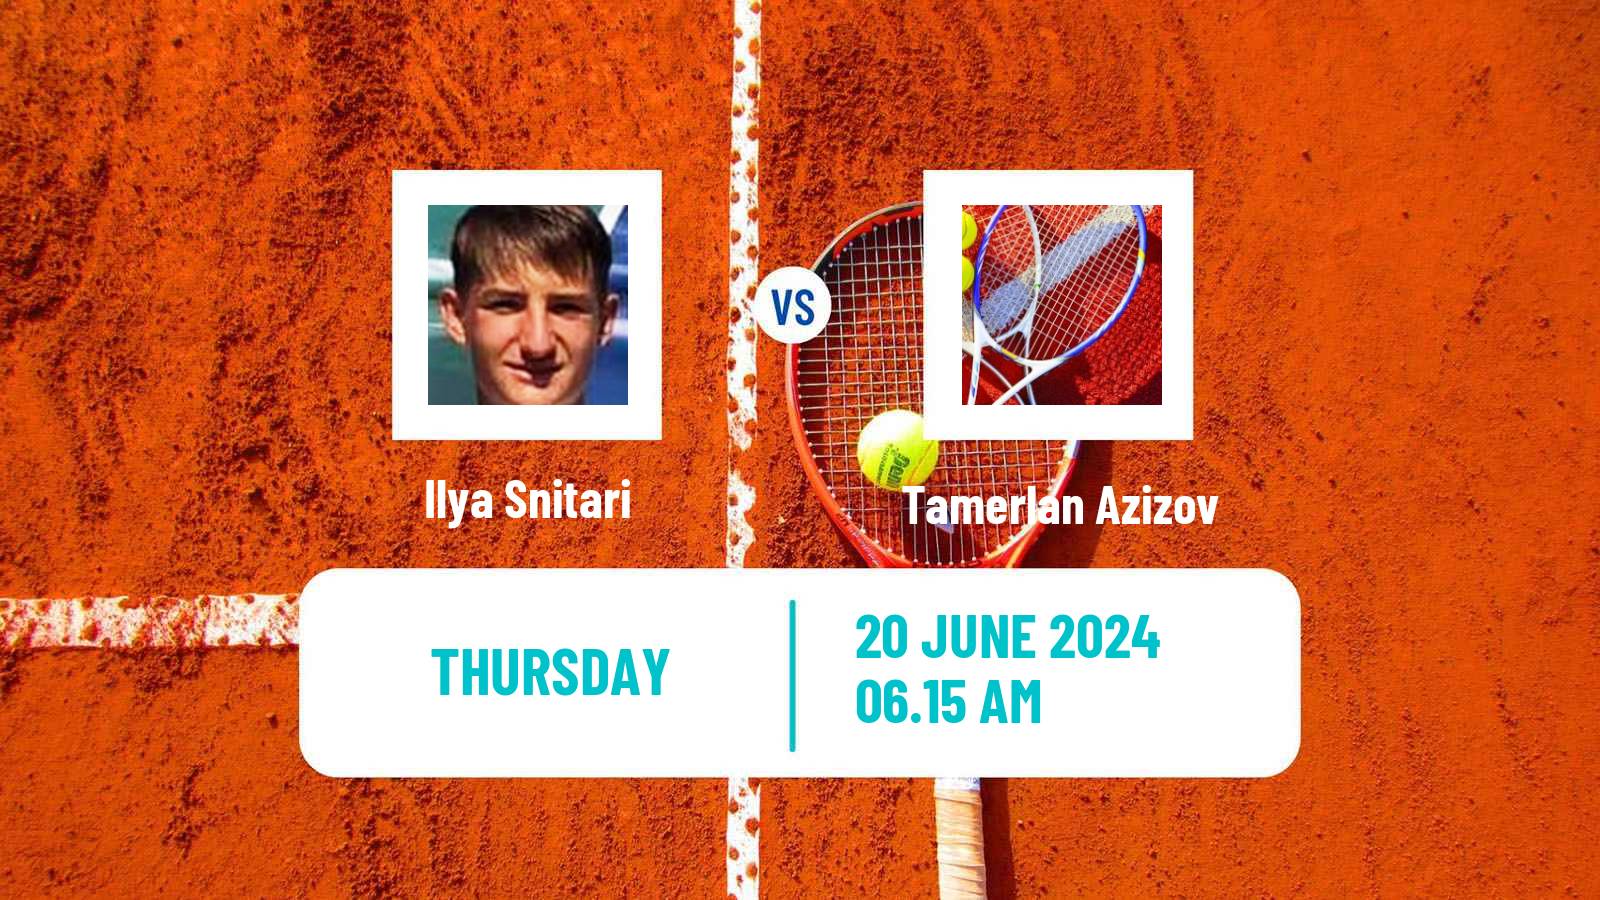 Tennis Davis Cup Group III Ilya Snitari - Tamerlan Azizov